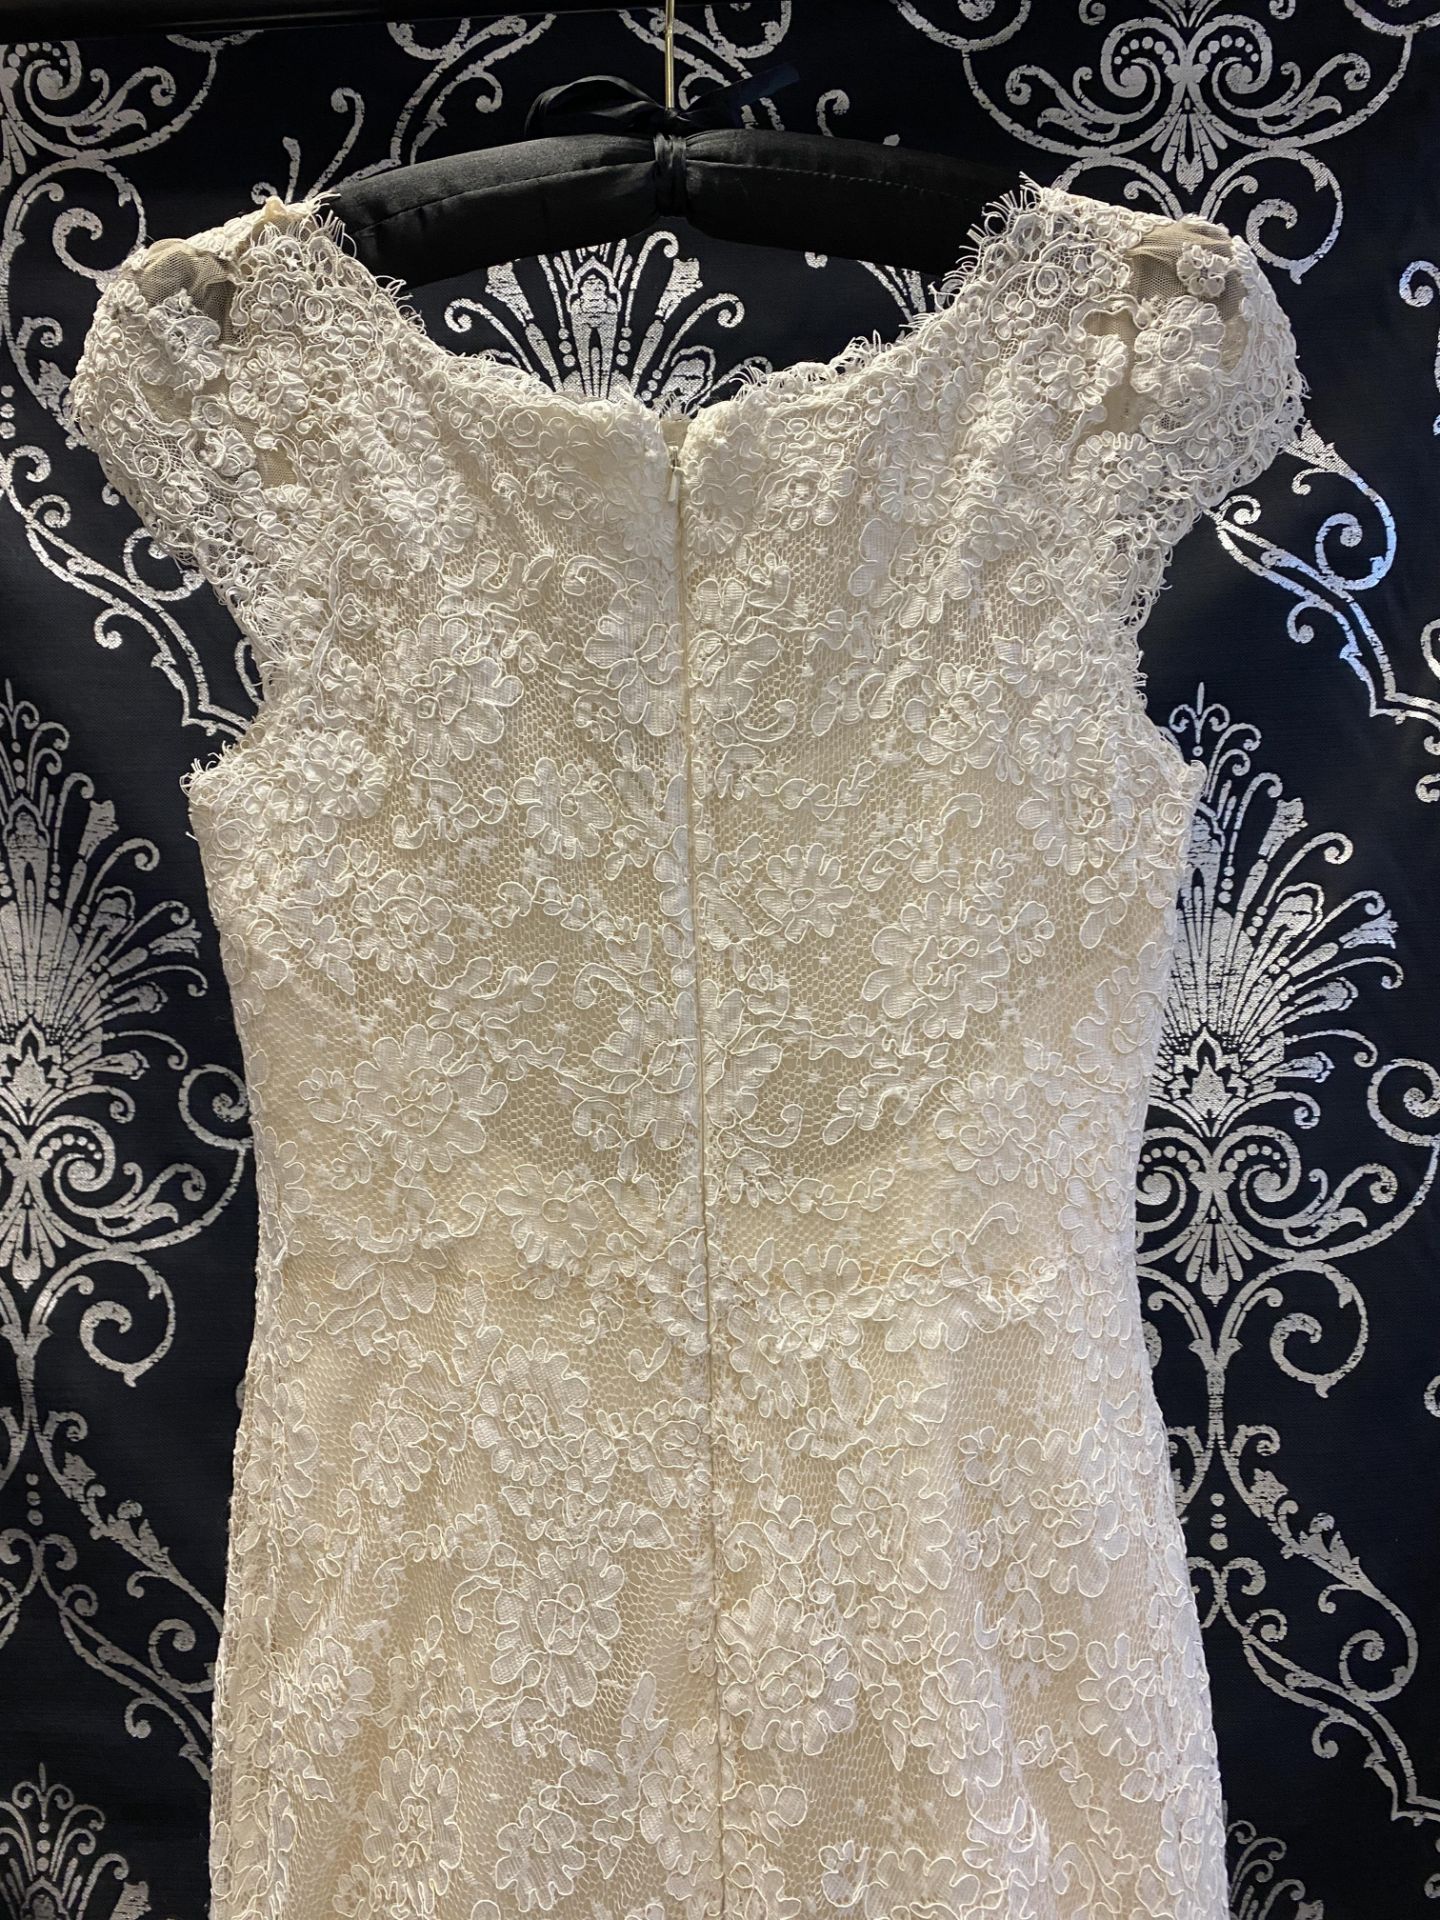 1 x ANNA SUL Y 'White Rose' Full Lace Mermaid Style Designer Wedding Dress RRP £1,250 - Image 5 of 11